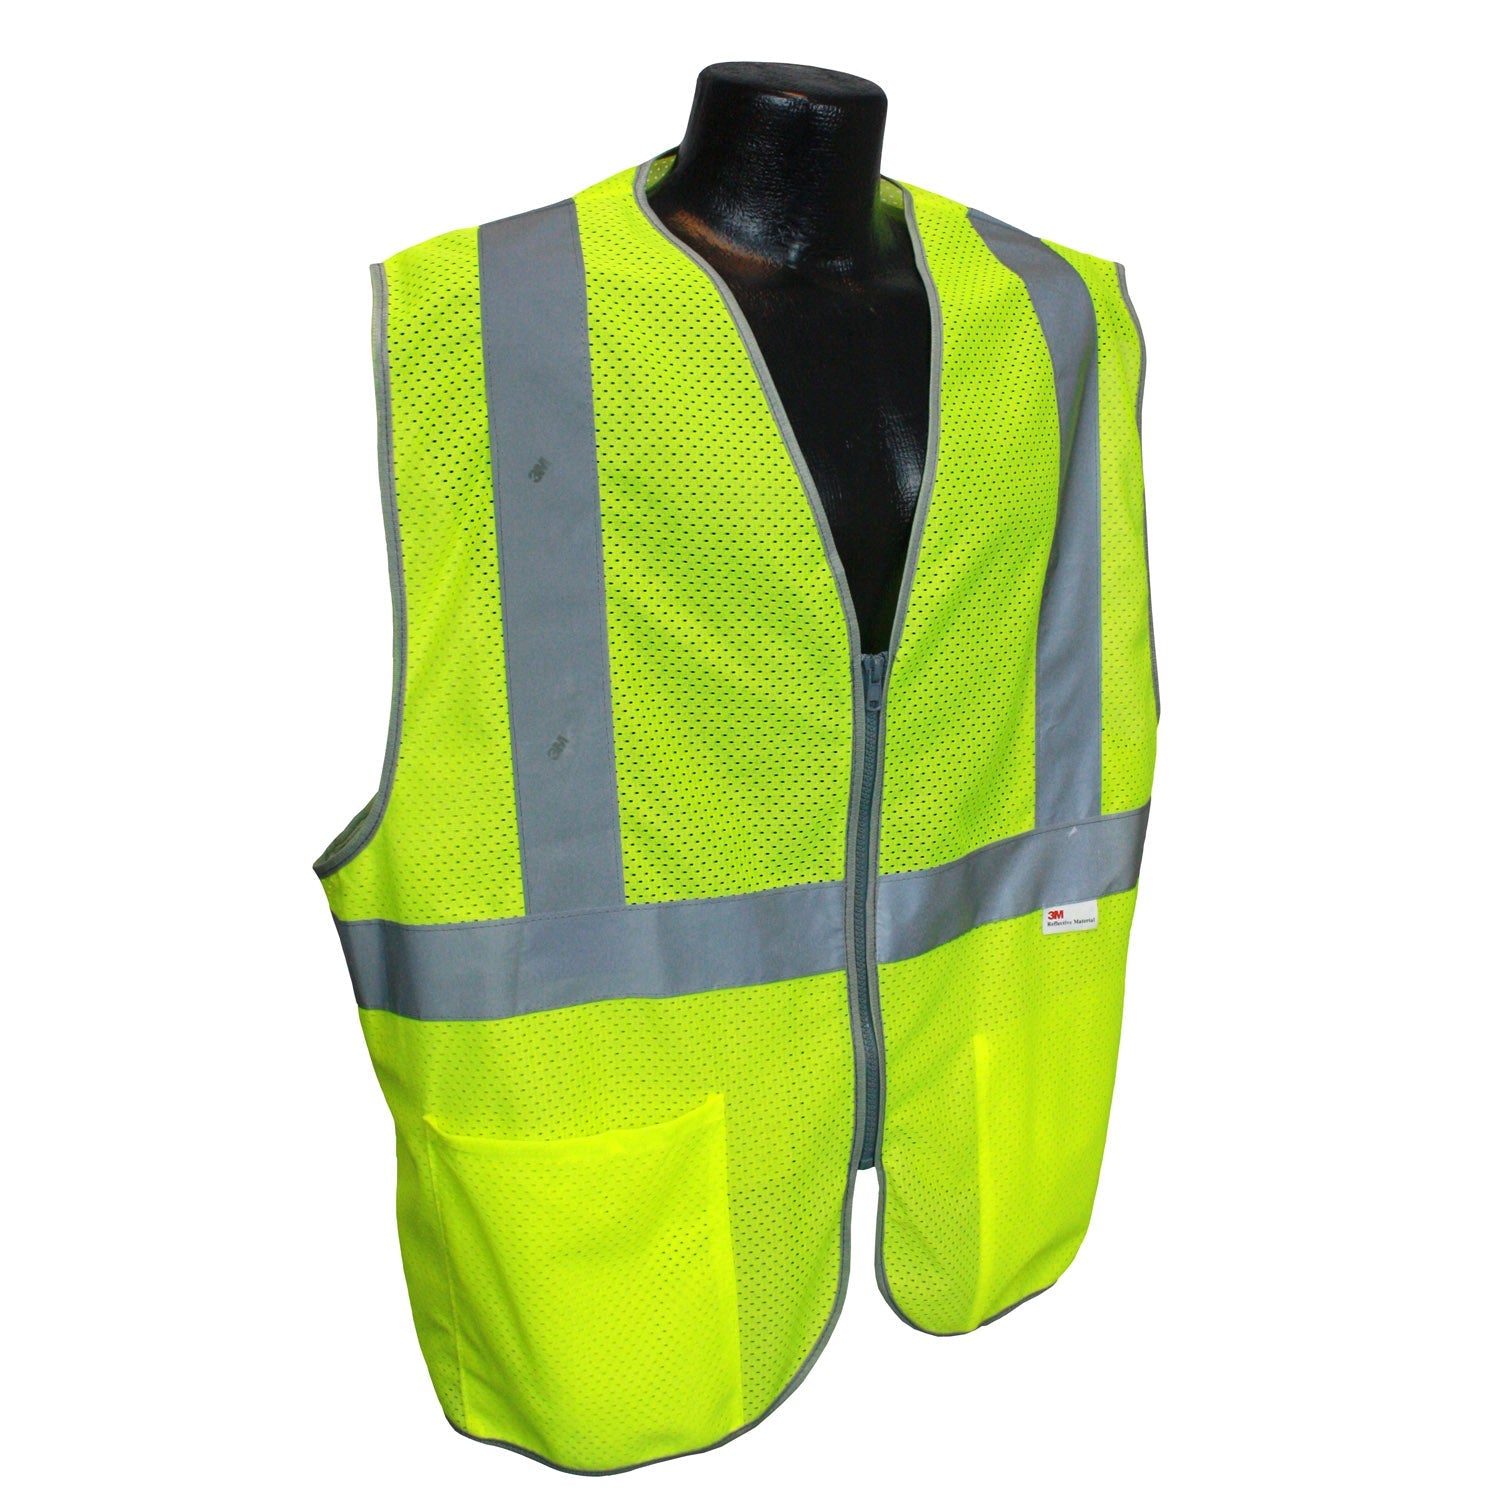 Radwear USA 5ANSI-PCZ Type R Class 2 Safety Vest - 3.5oz Poly Mesh